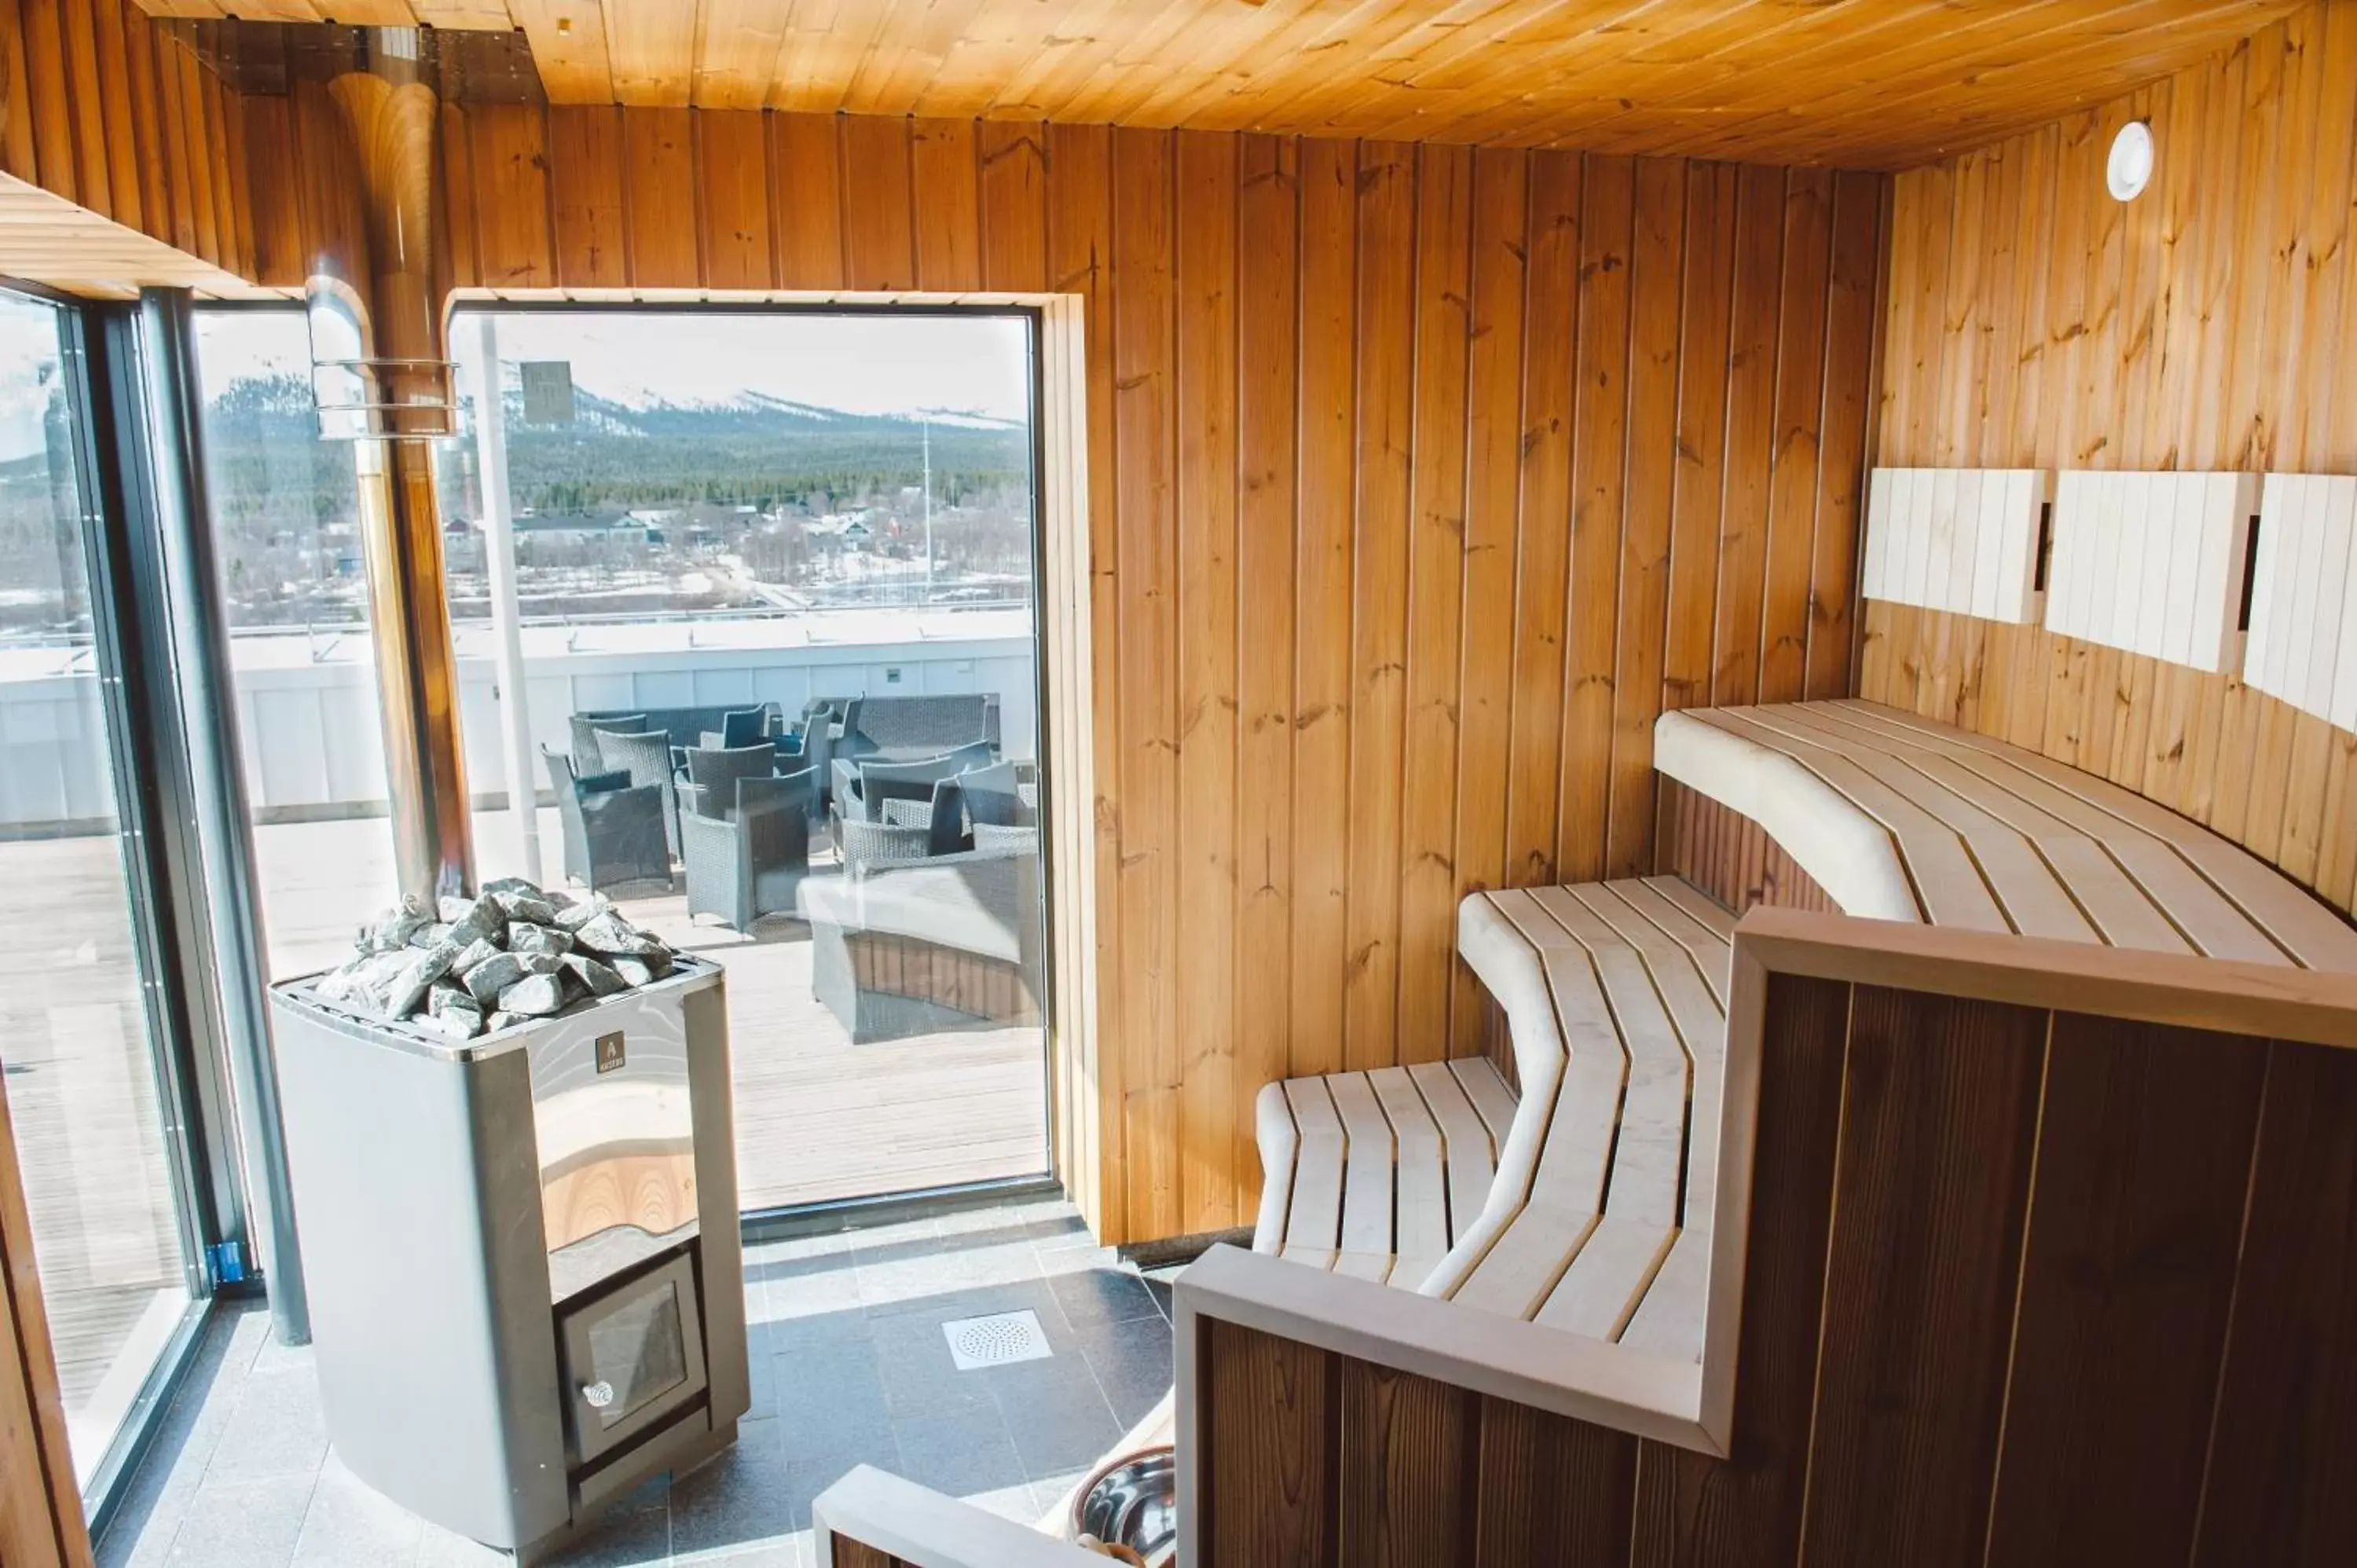 Sauna in Grand Hotel Lapland